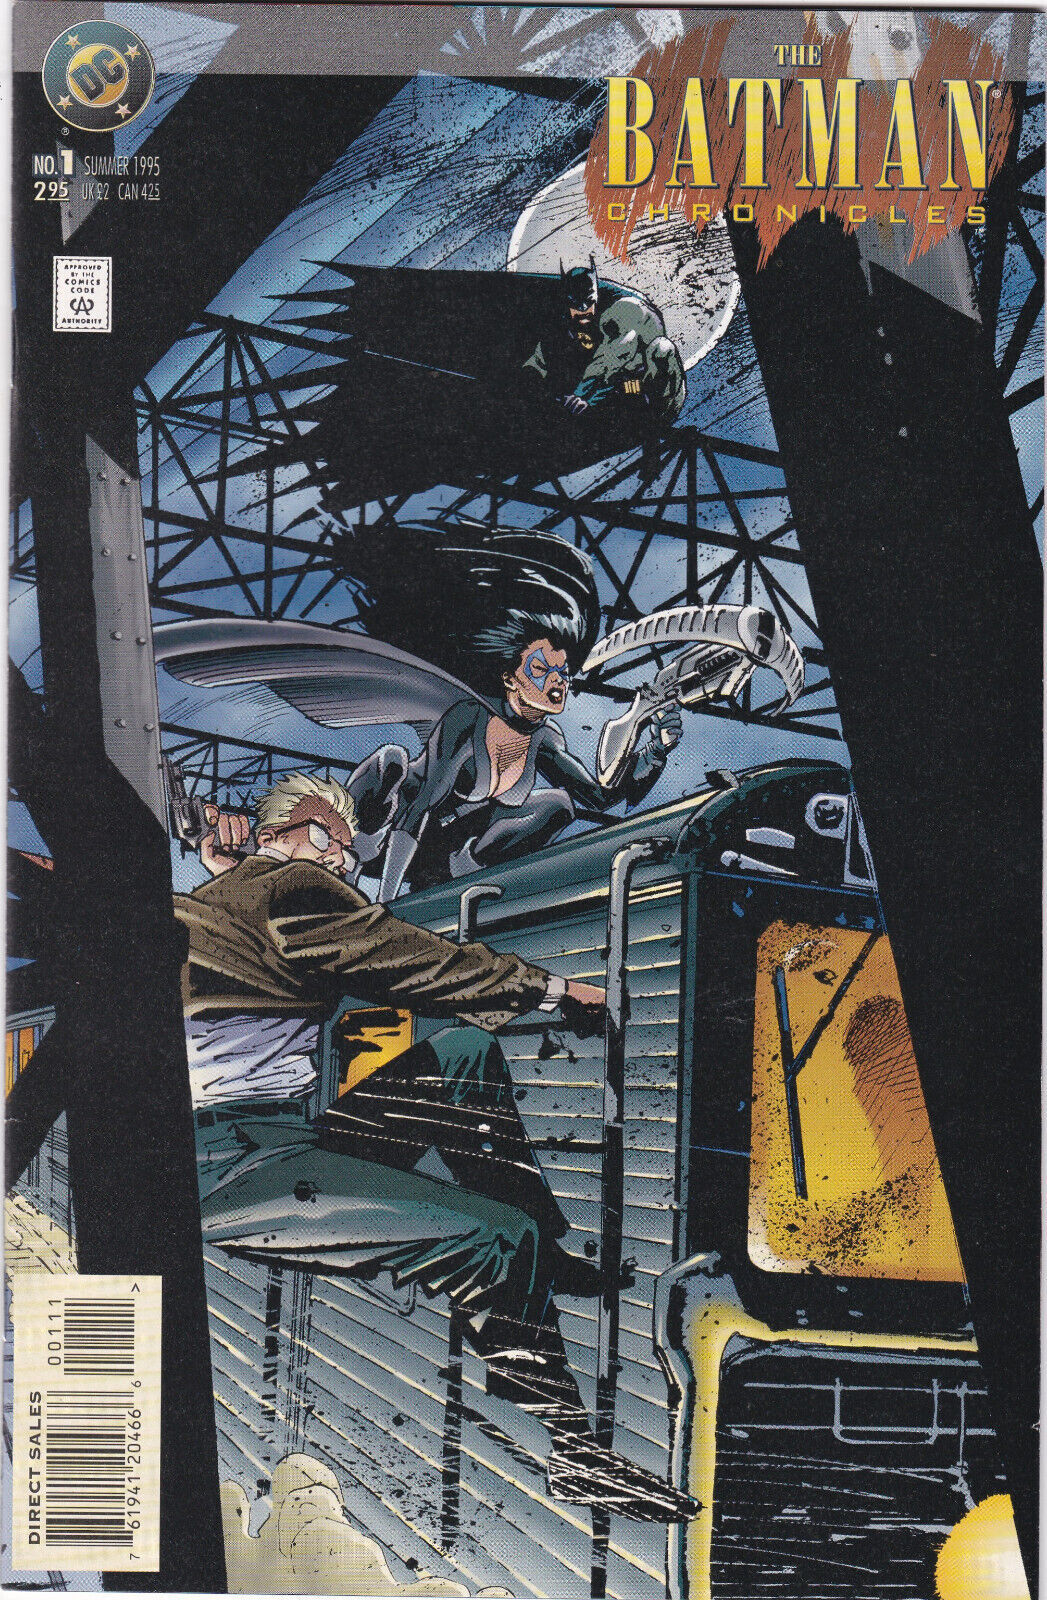 The Batman Chronicles Issue No. 1 - DC Comics, High Grade